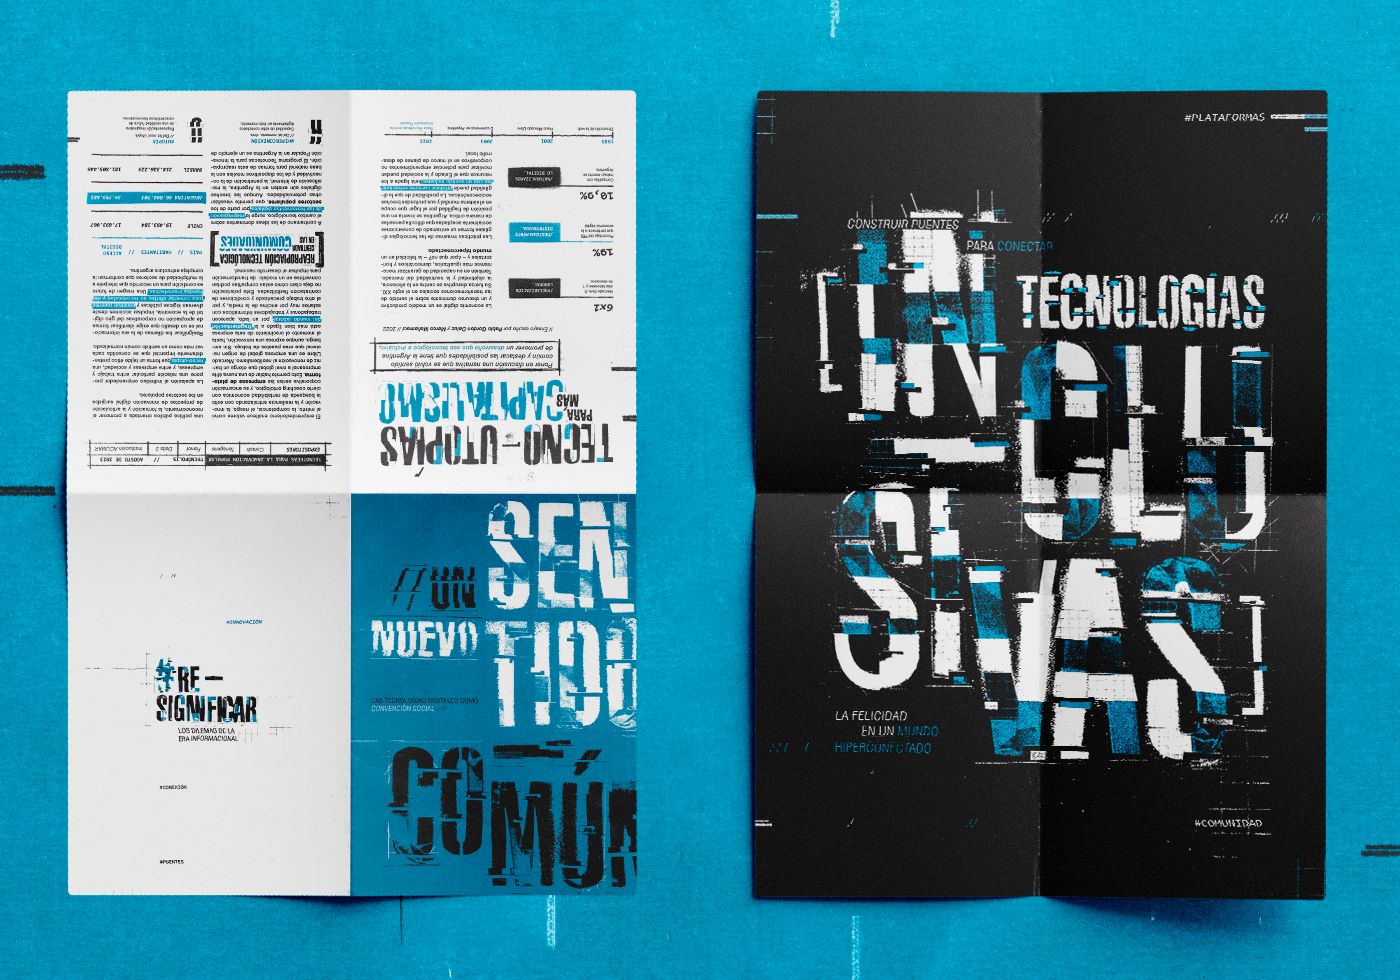 design graphic design  typography   tipografia diseño gráfico diseño desplegable Gabriele fadu uba